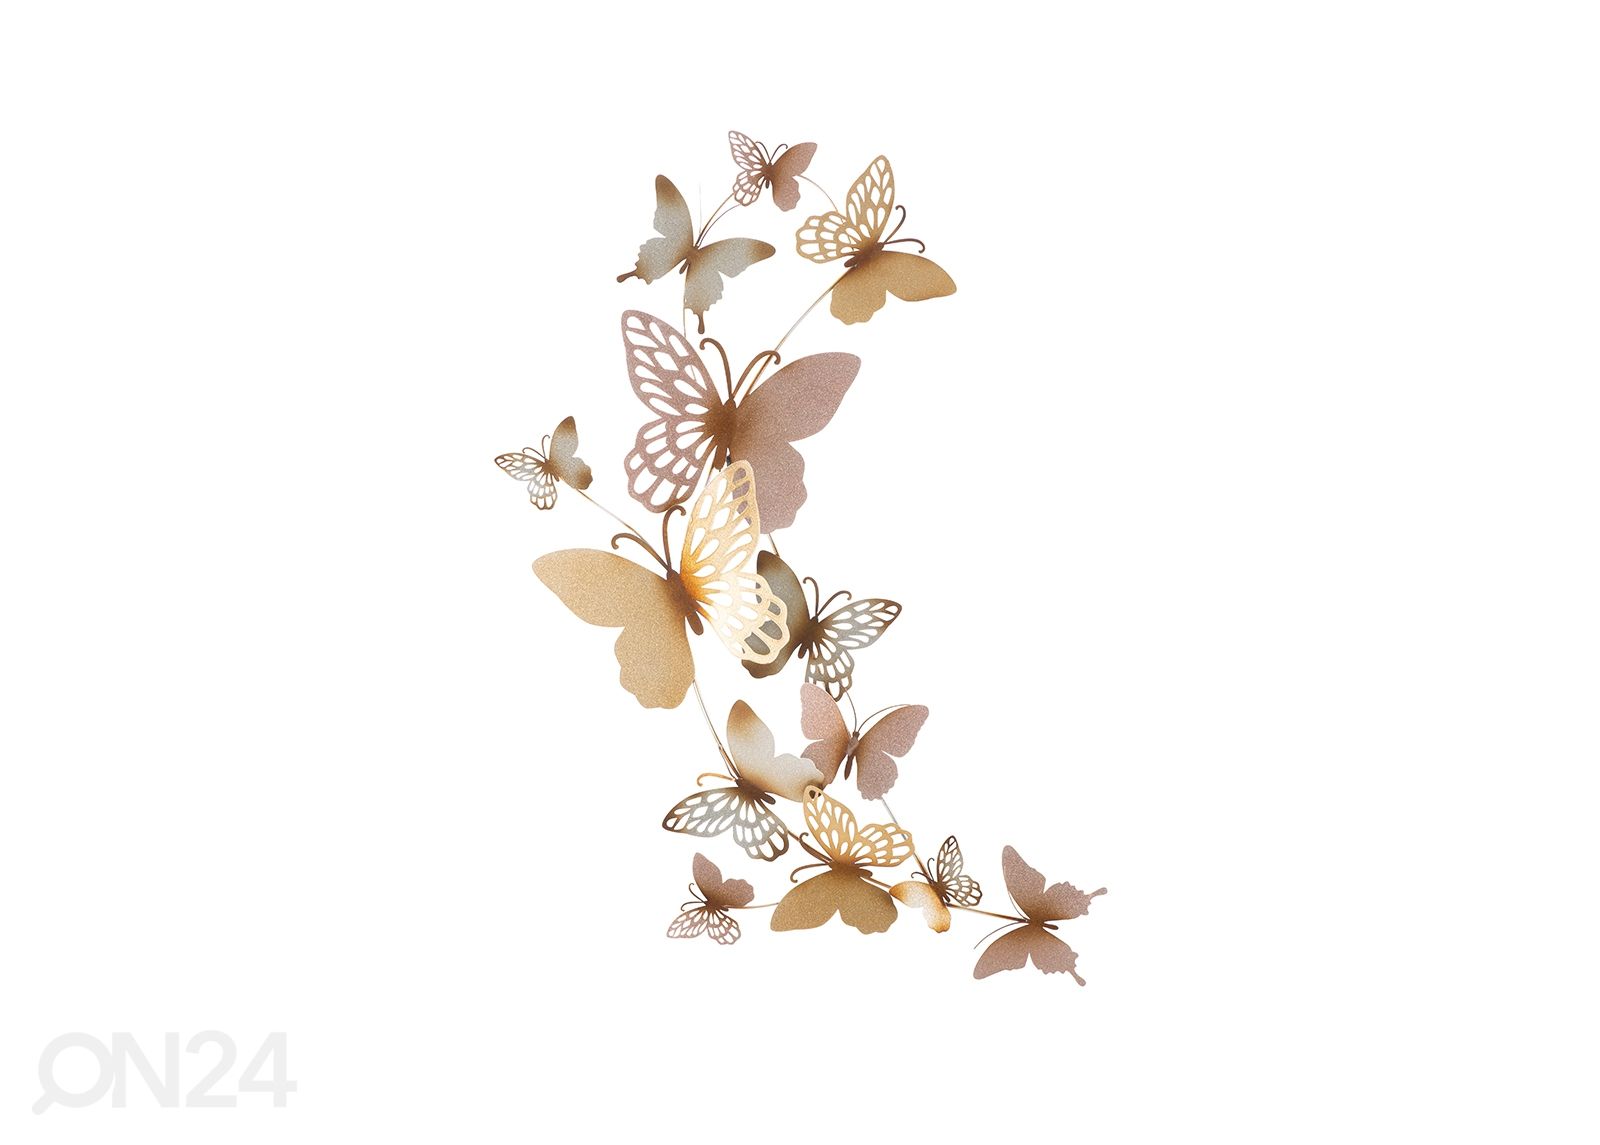 Seinadekoratsioon Butterflies 59,5x111,5 cm suurendatud